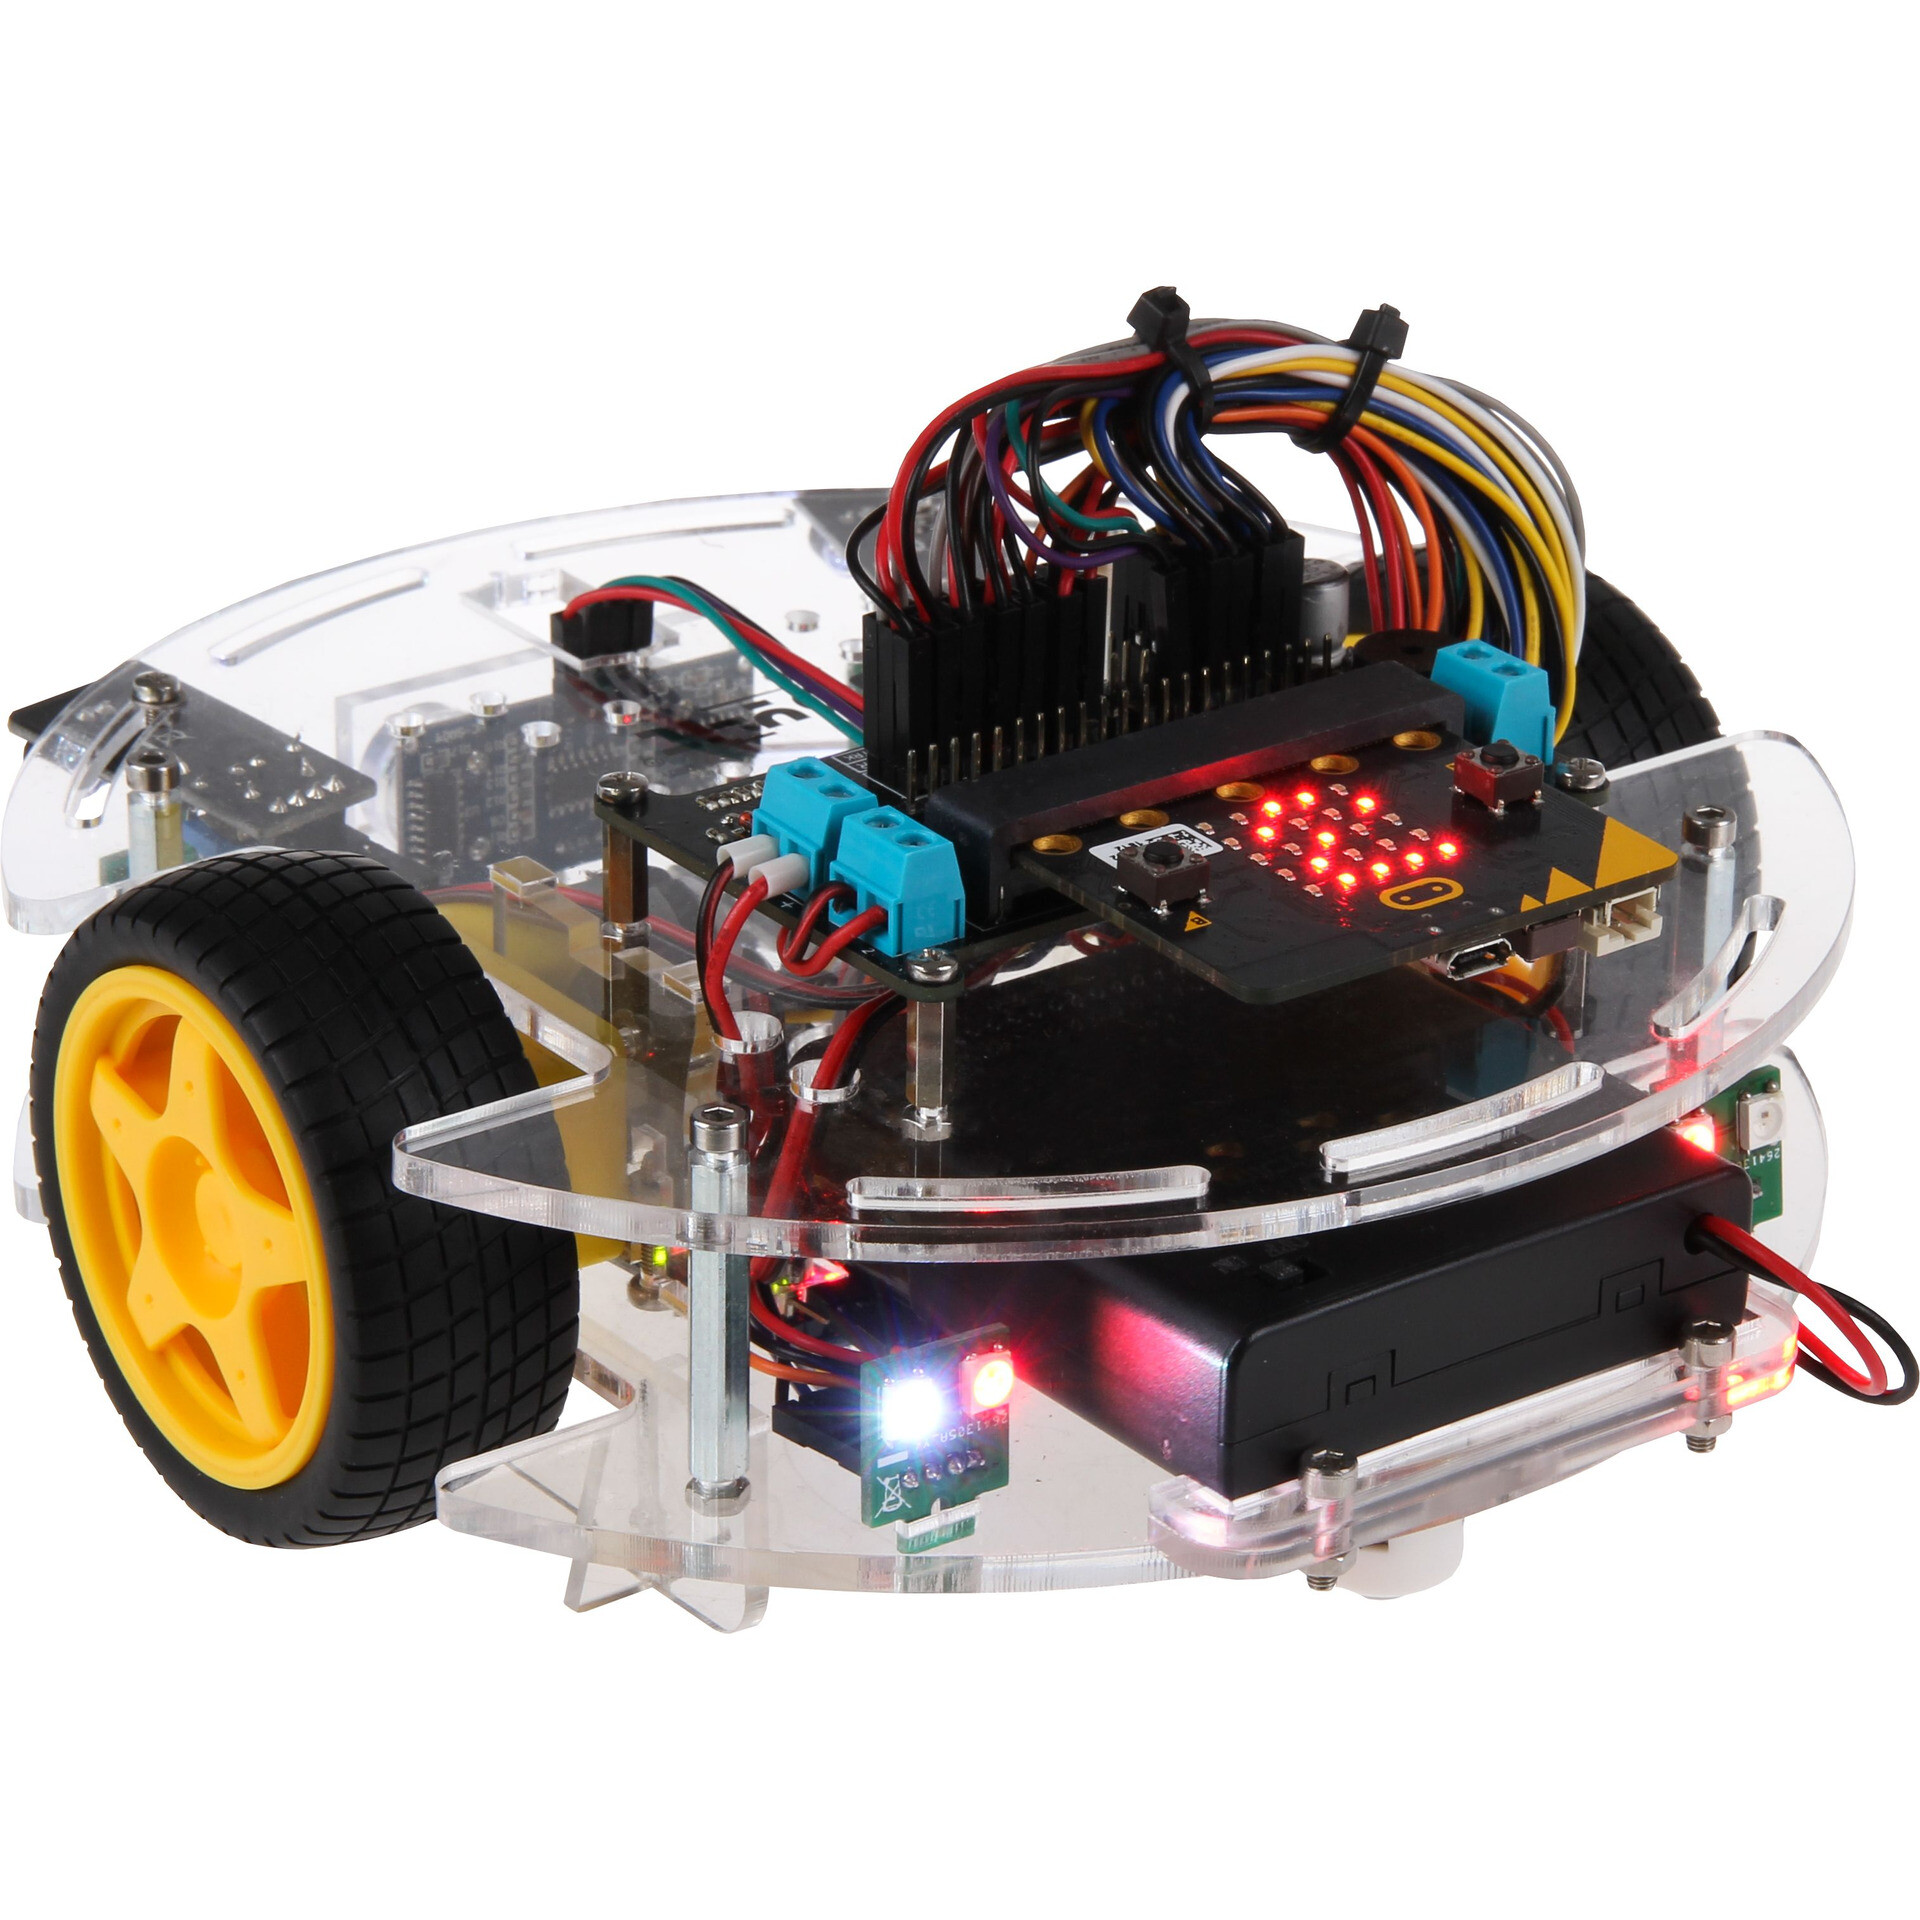 Joy-IT Bausatz programmierbares Roboterauto Joy-Car inkl. Einplatinencomputer micro:bit v2